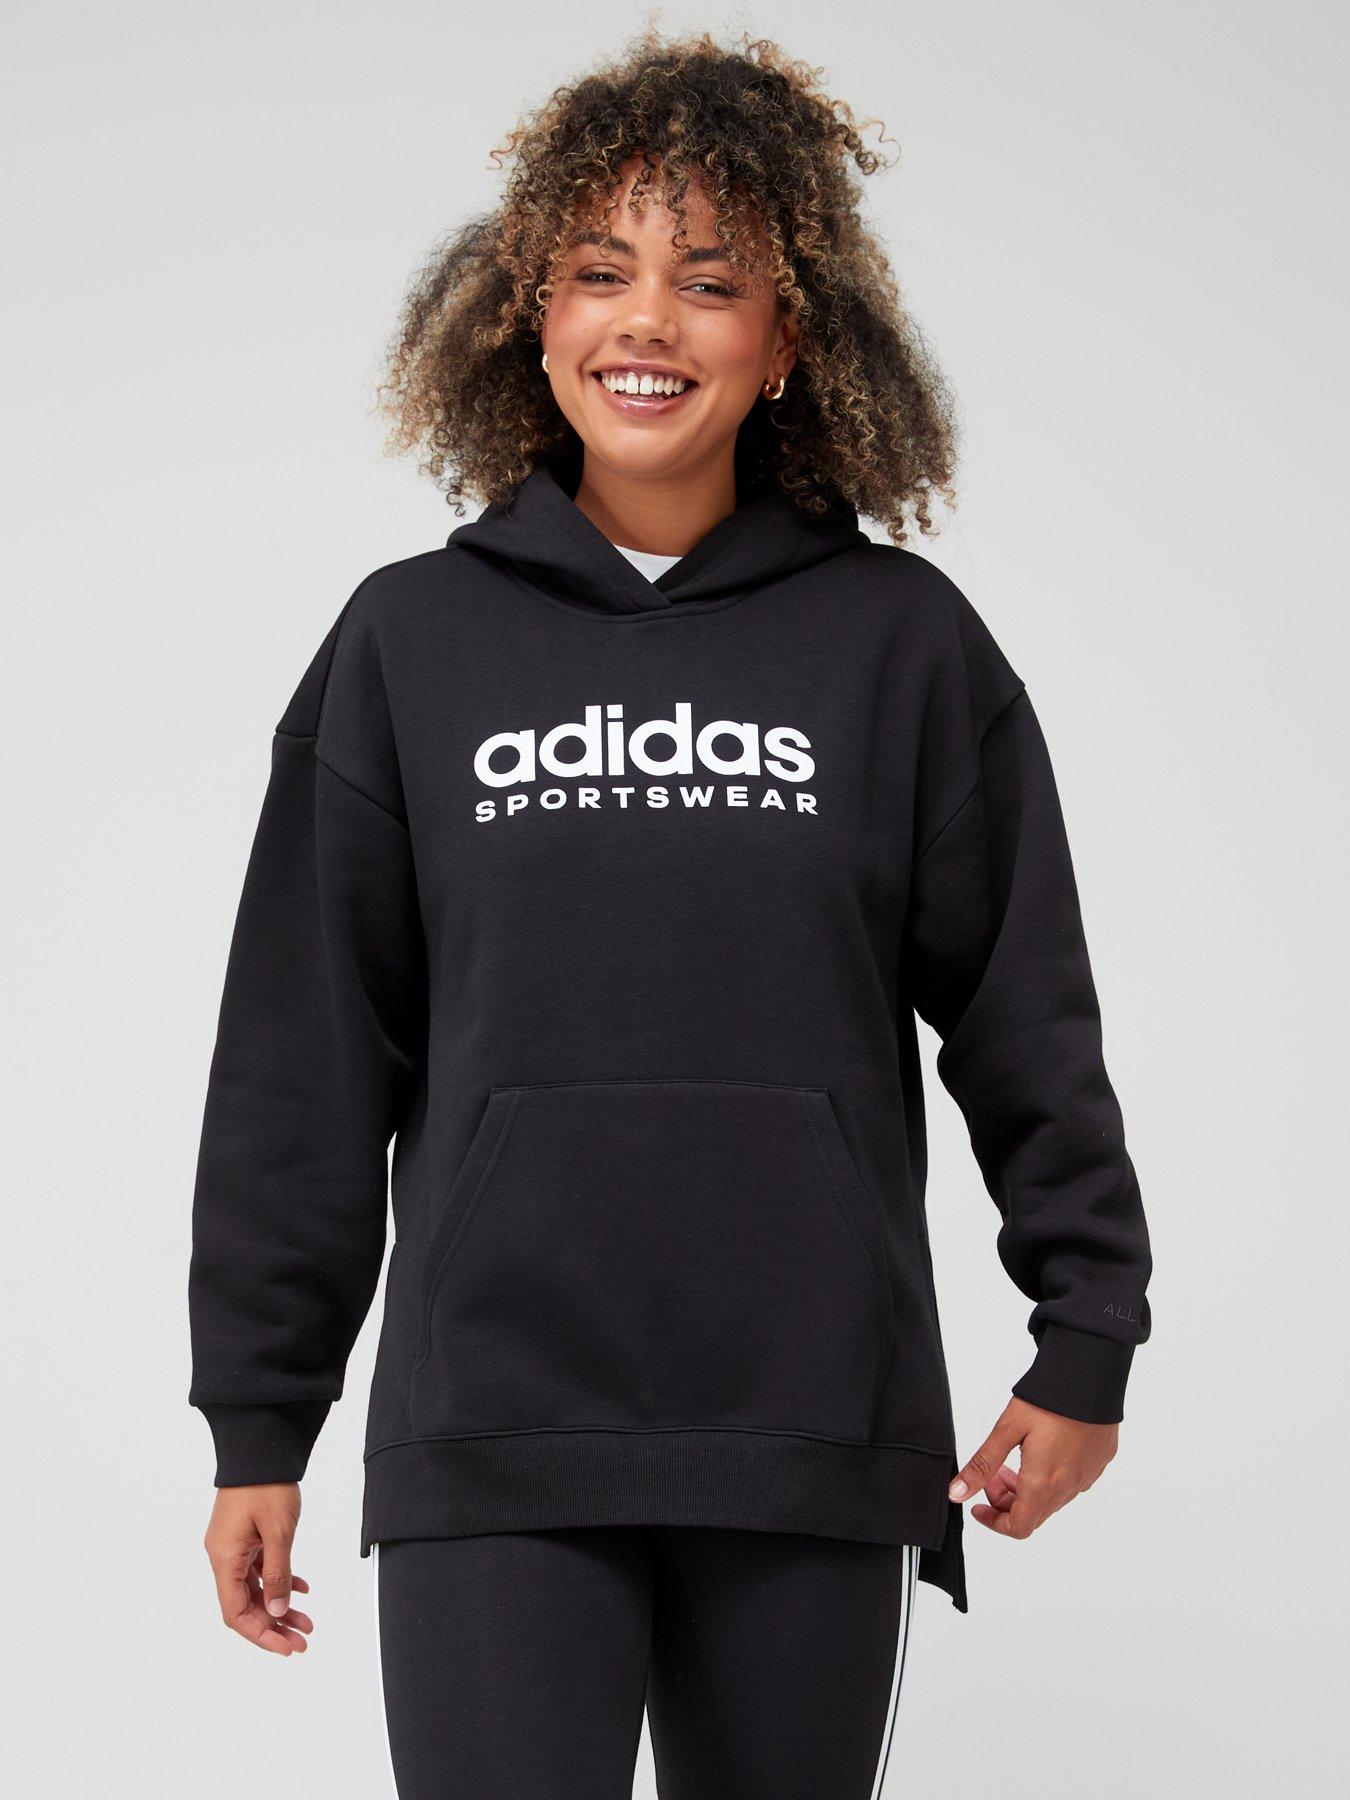 Very & | | sports | | Ireland | clothing Sports Womens & Adidas leisure sweatshirts Black Hoodies